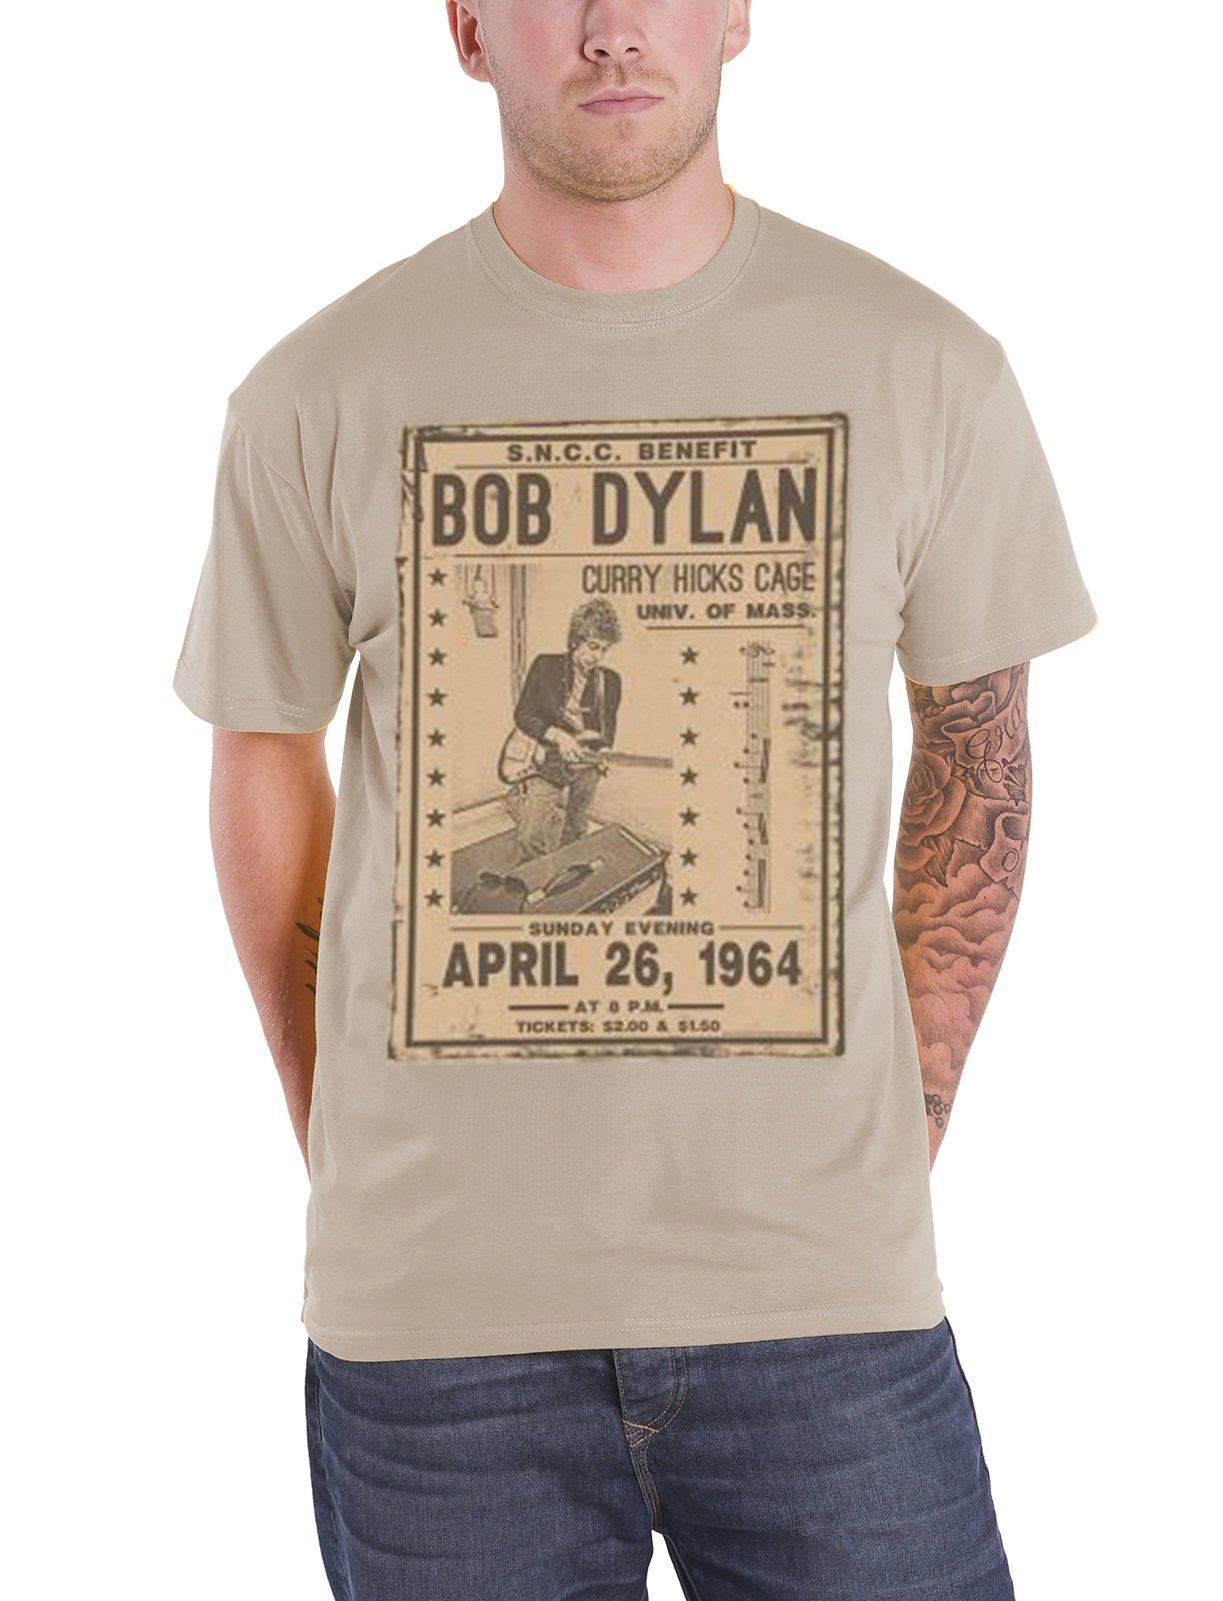 Футболка с флаером Карри Хикс Кейджа, апрель 1964 года Bob Dylan, коричневый bob dylan bob dylan blonde on blonde reissue 2 lp